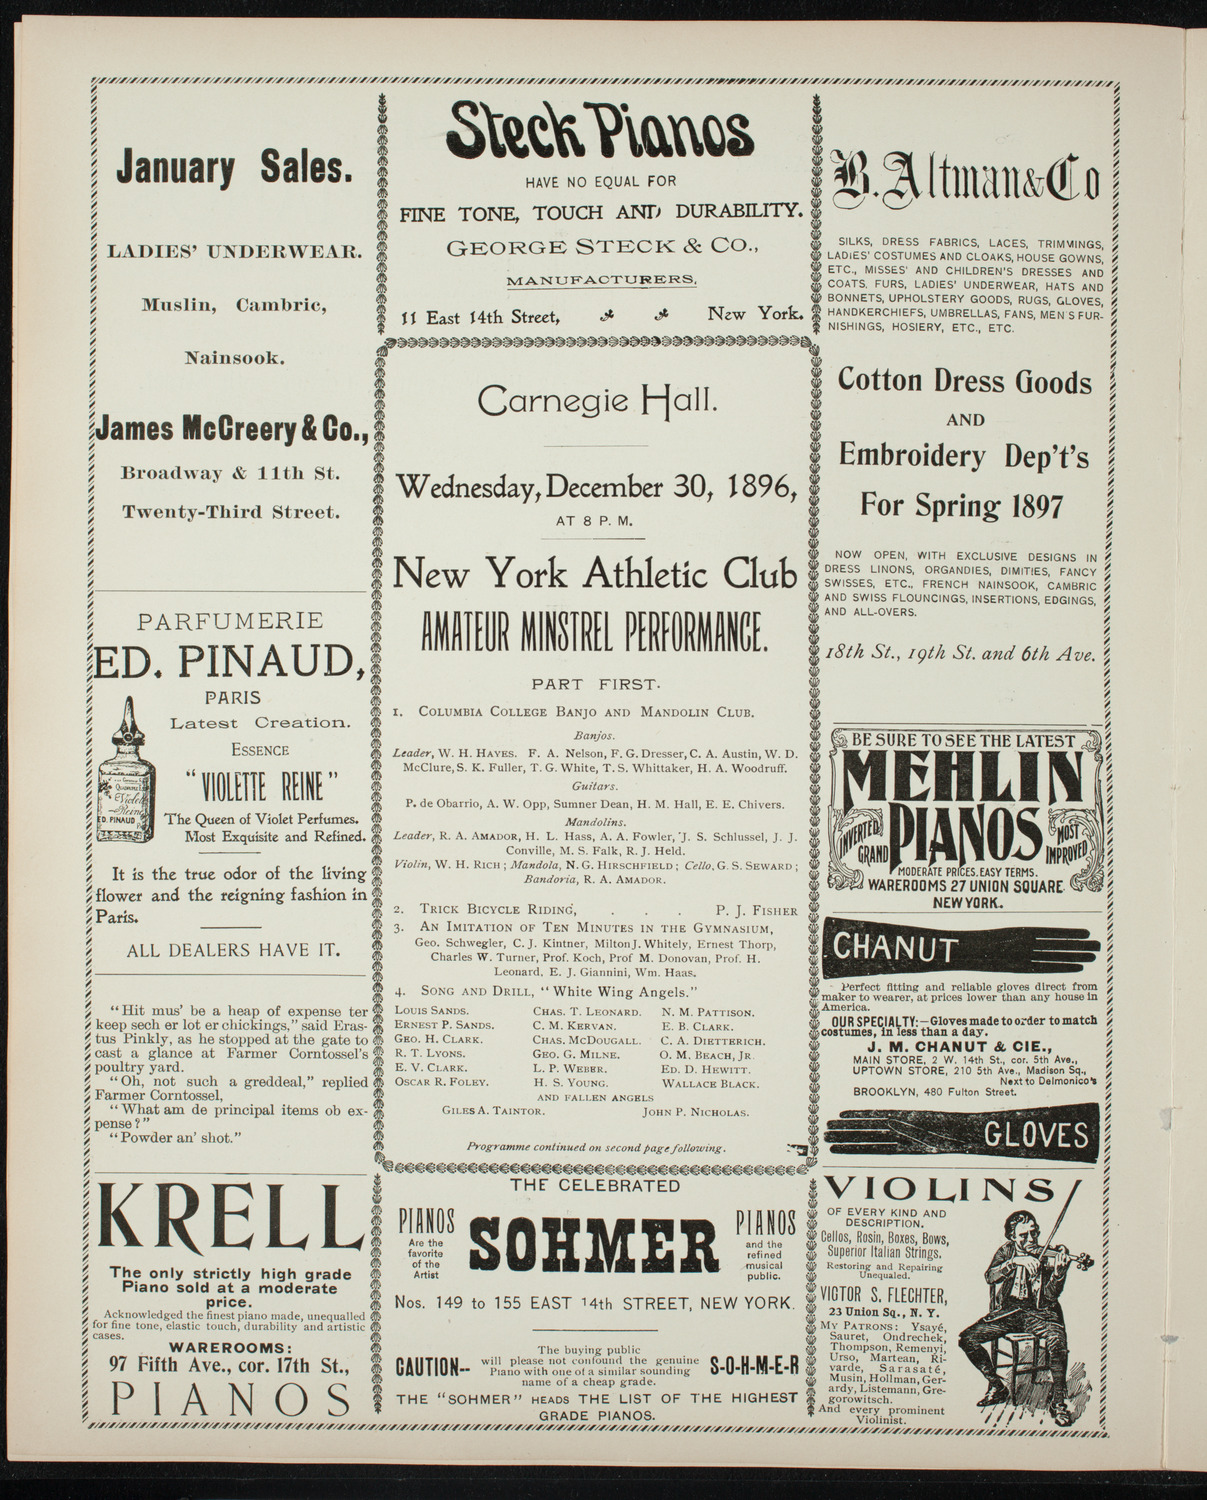 New York Athletic Club Amateur Minstrel Performance, December 30, 1896, program page 4